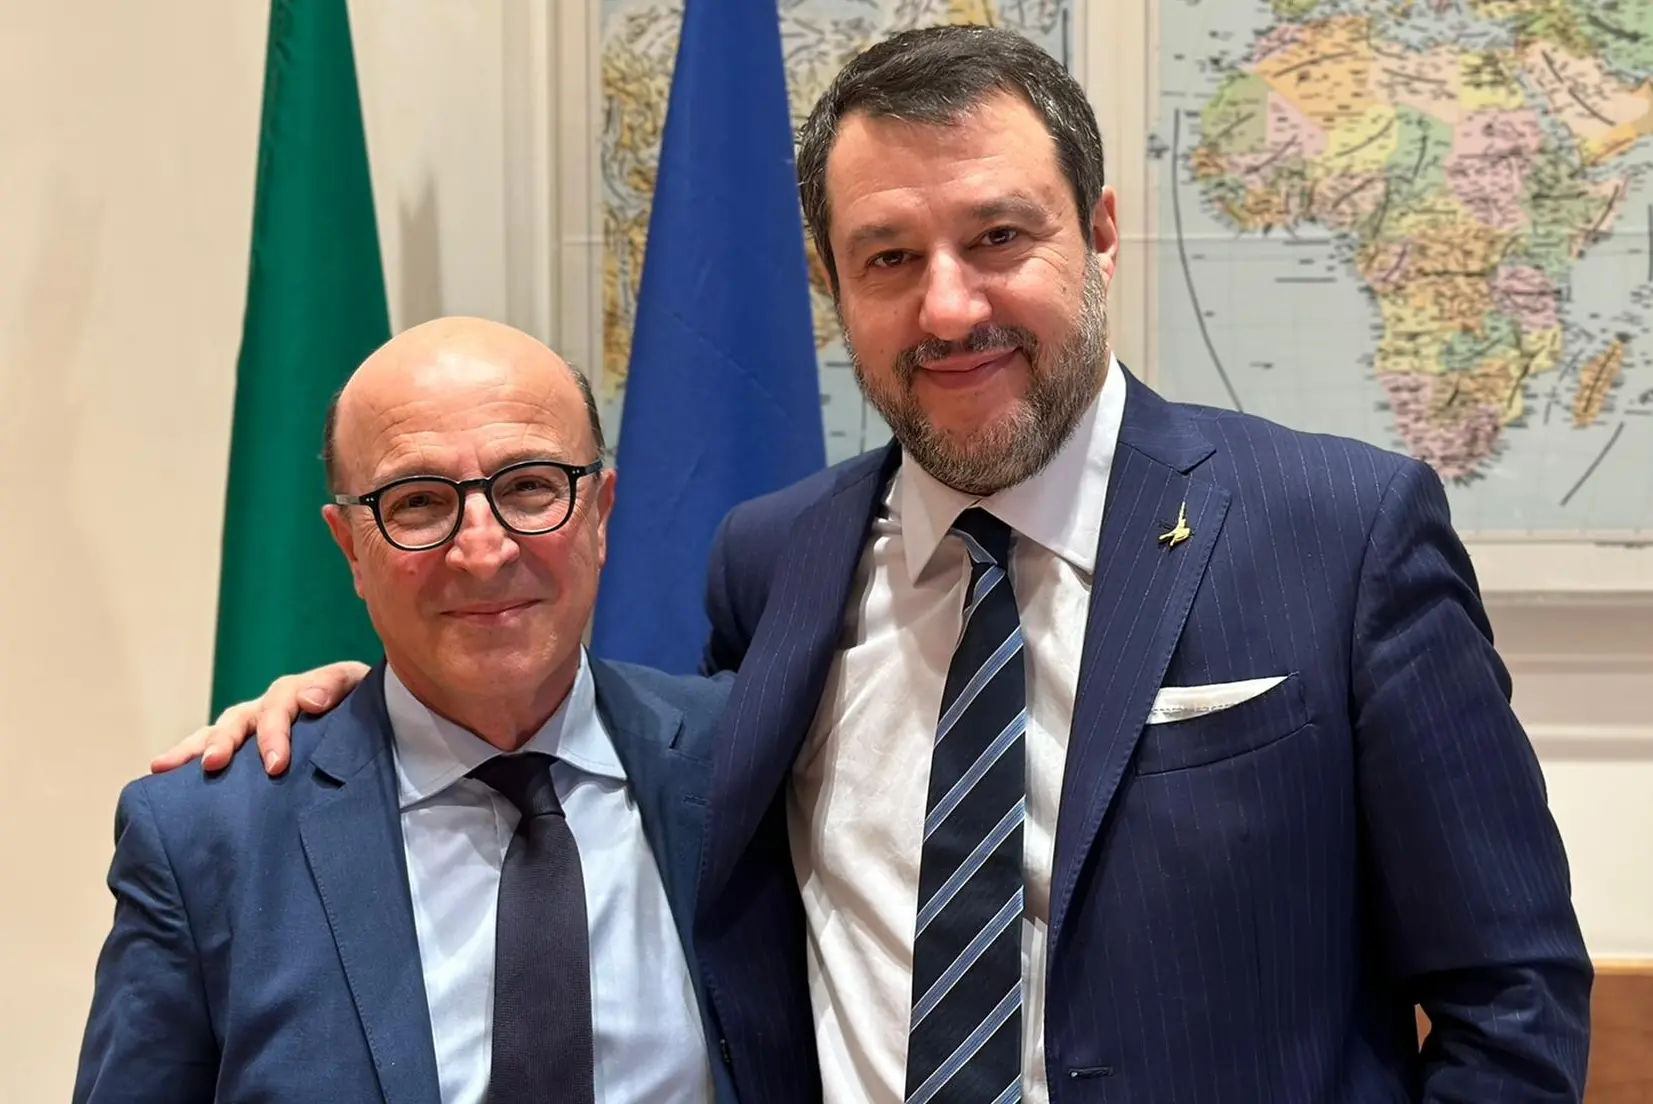 Mario Nieddu e Matteo Salvini